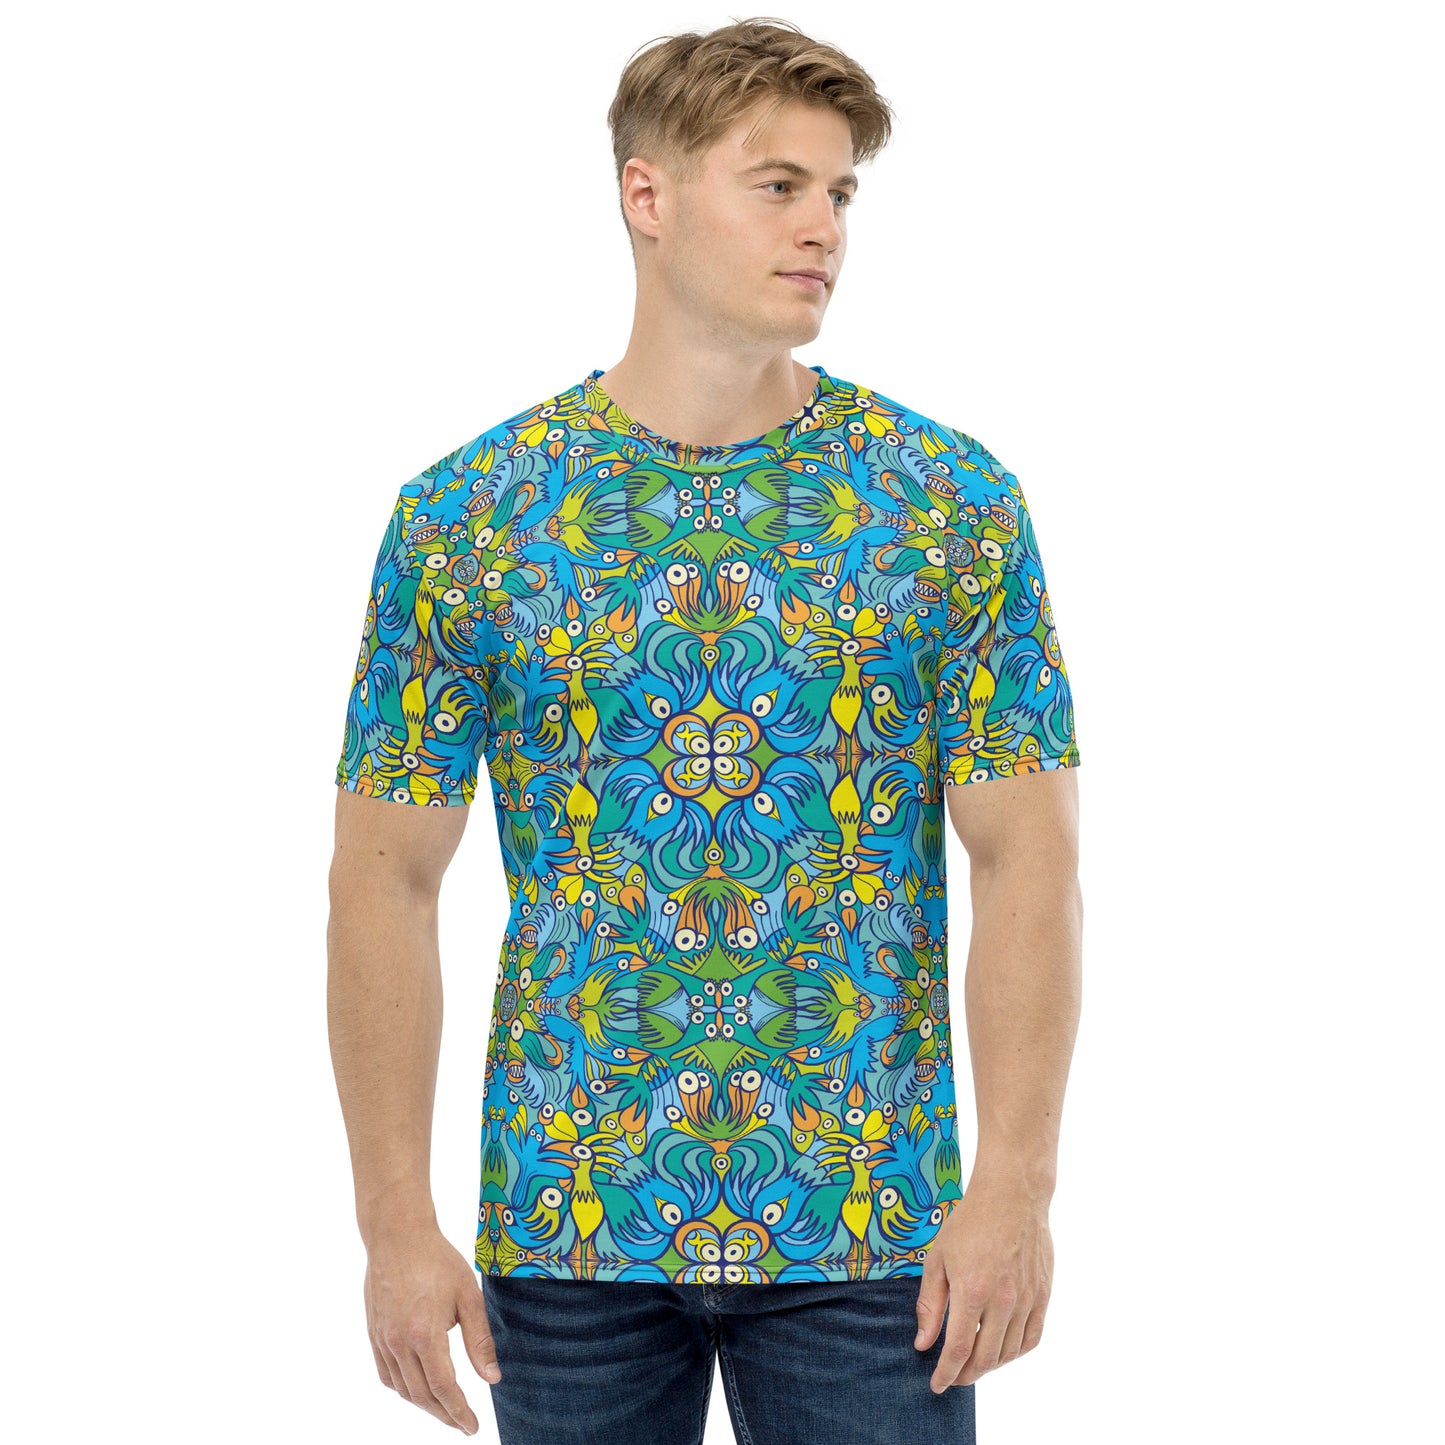 Exotic birds tropical pattern Men's T-shirt. Front view